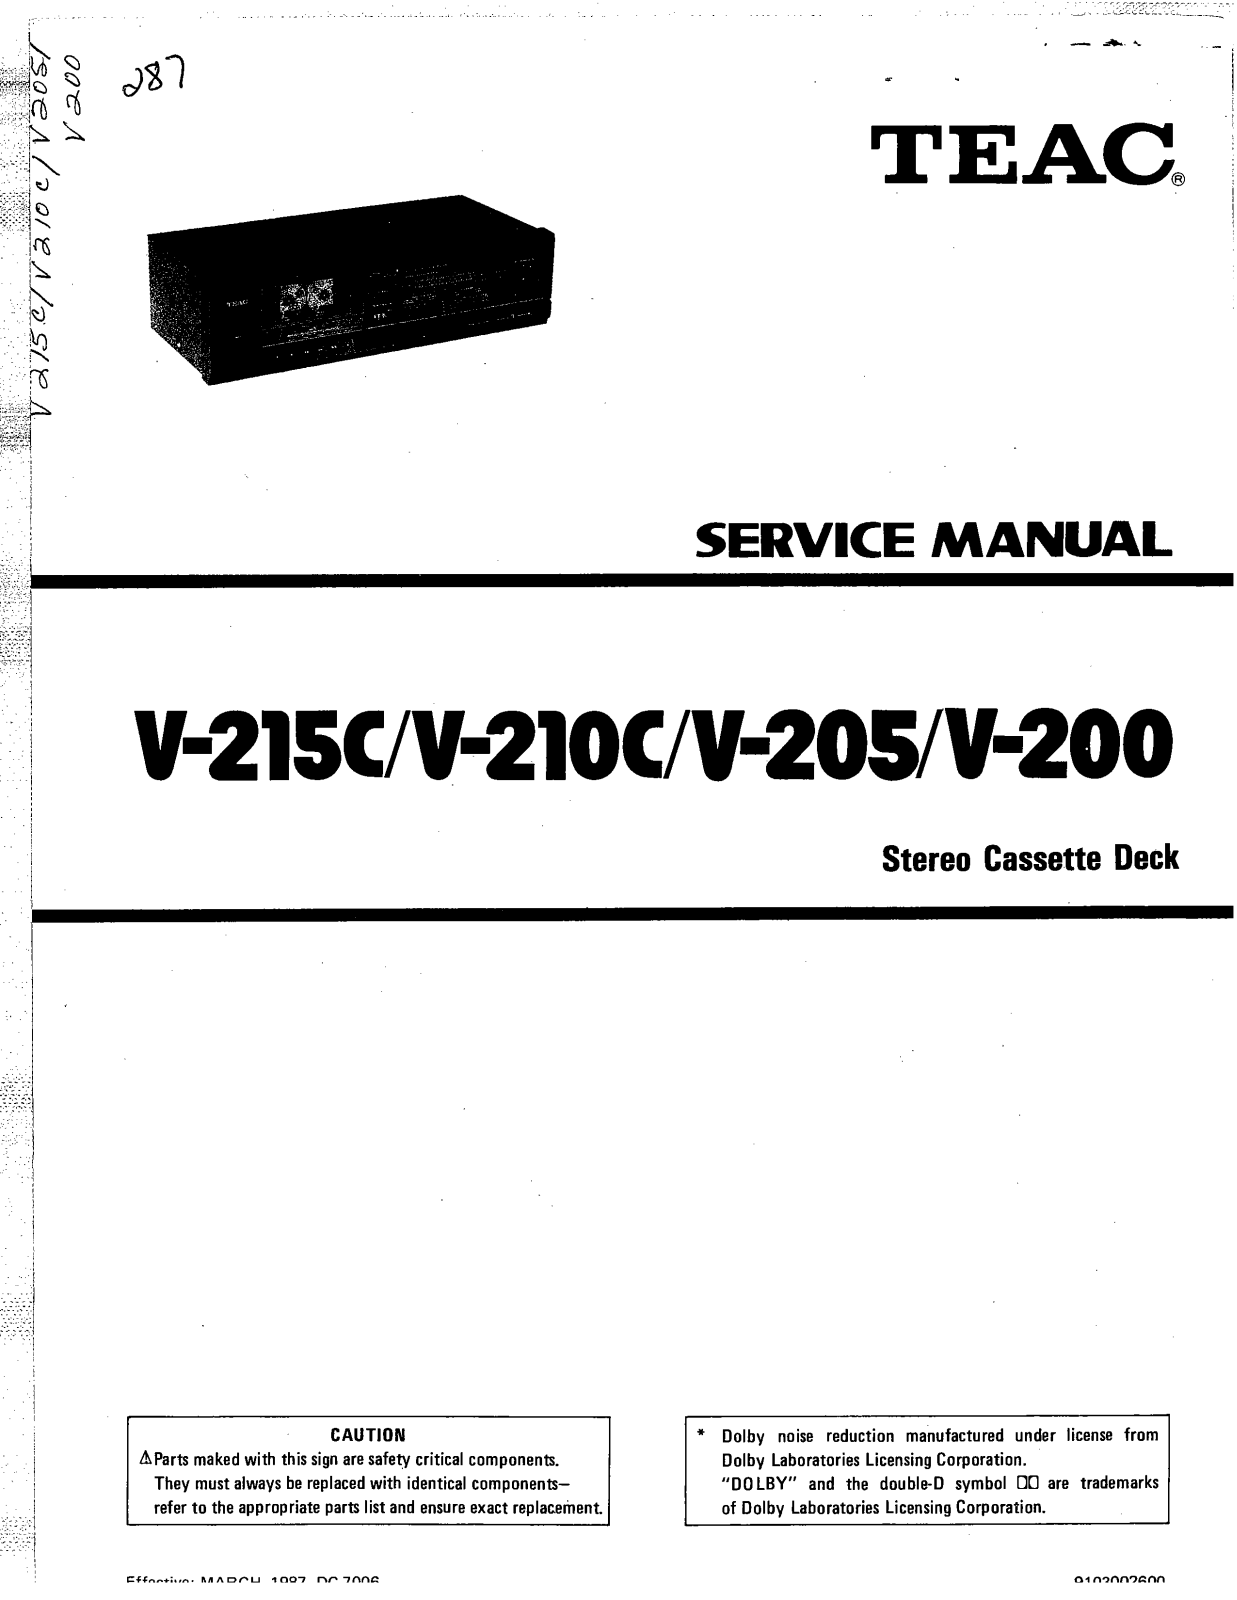 TEAC V215C, V210C, V205C, V200C Service Manual